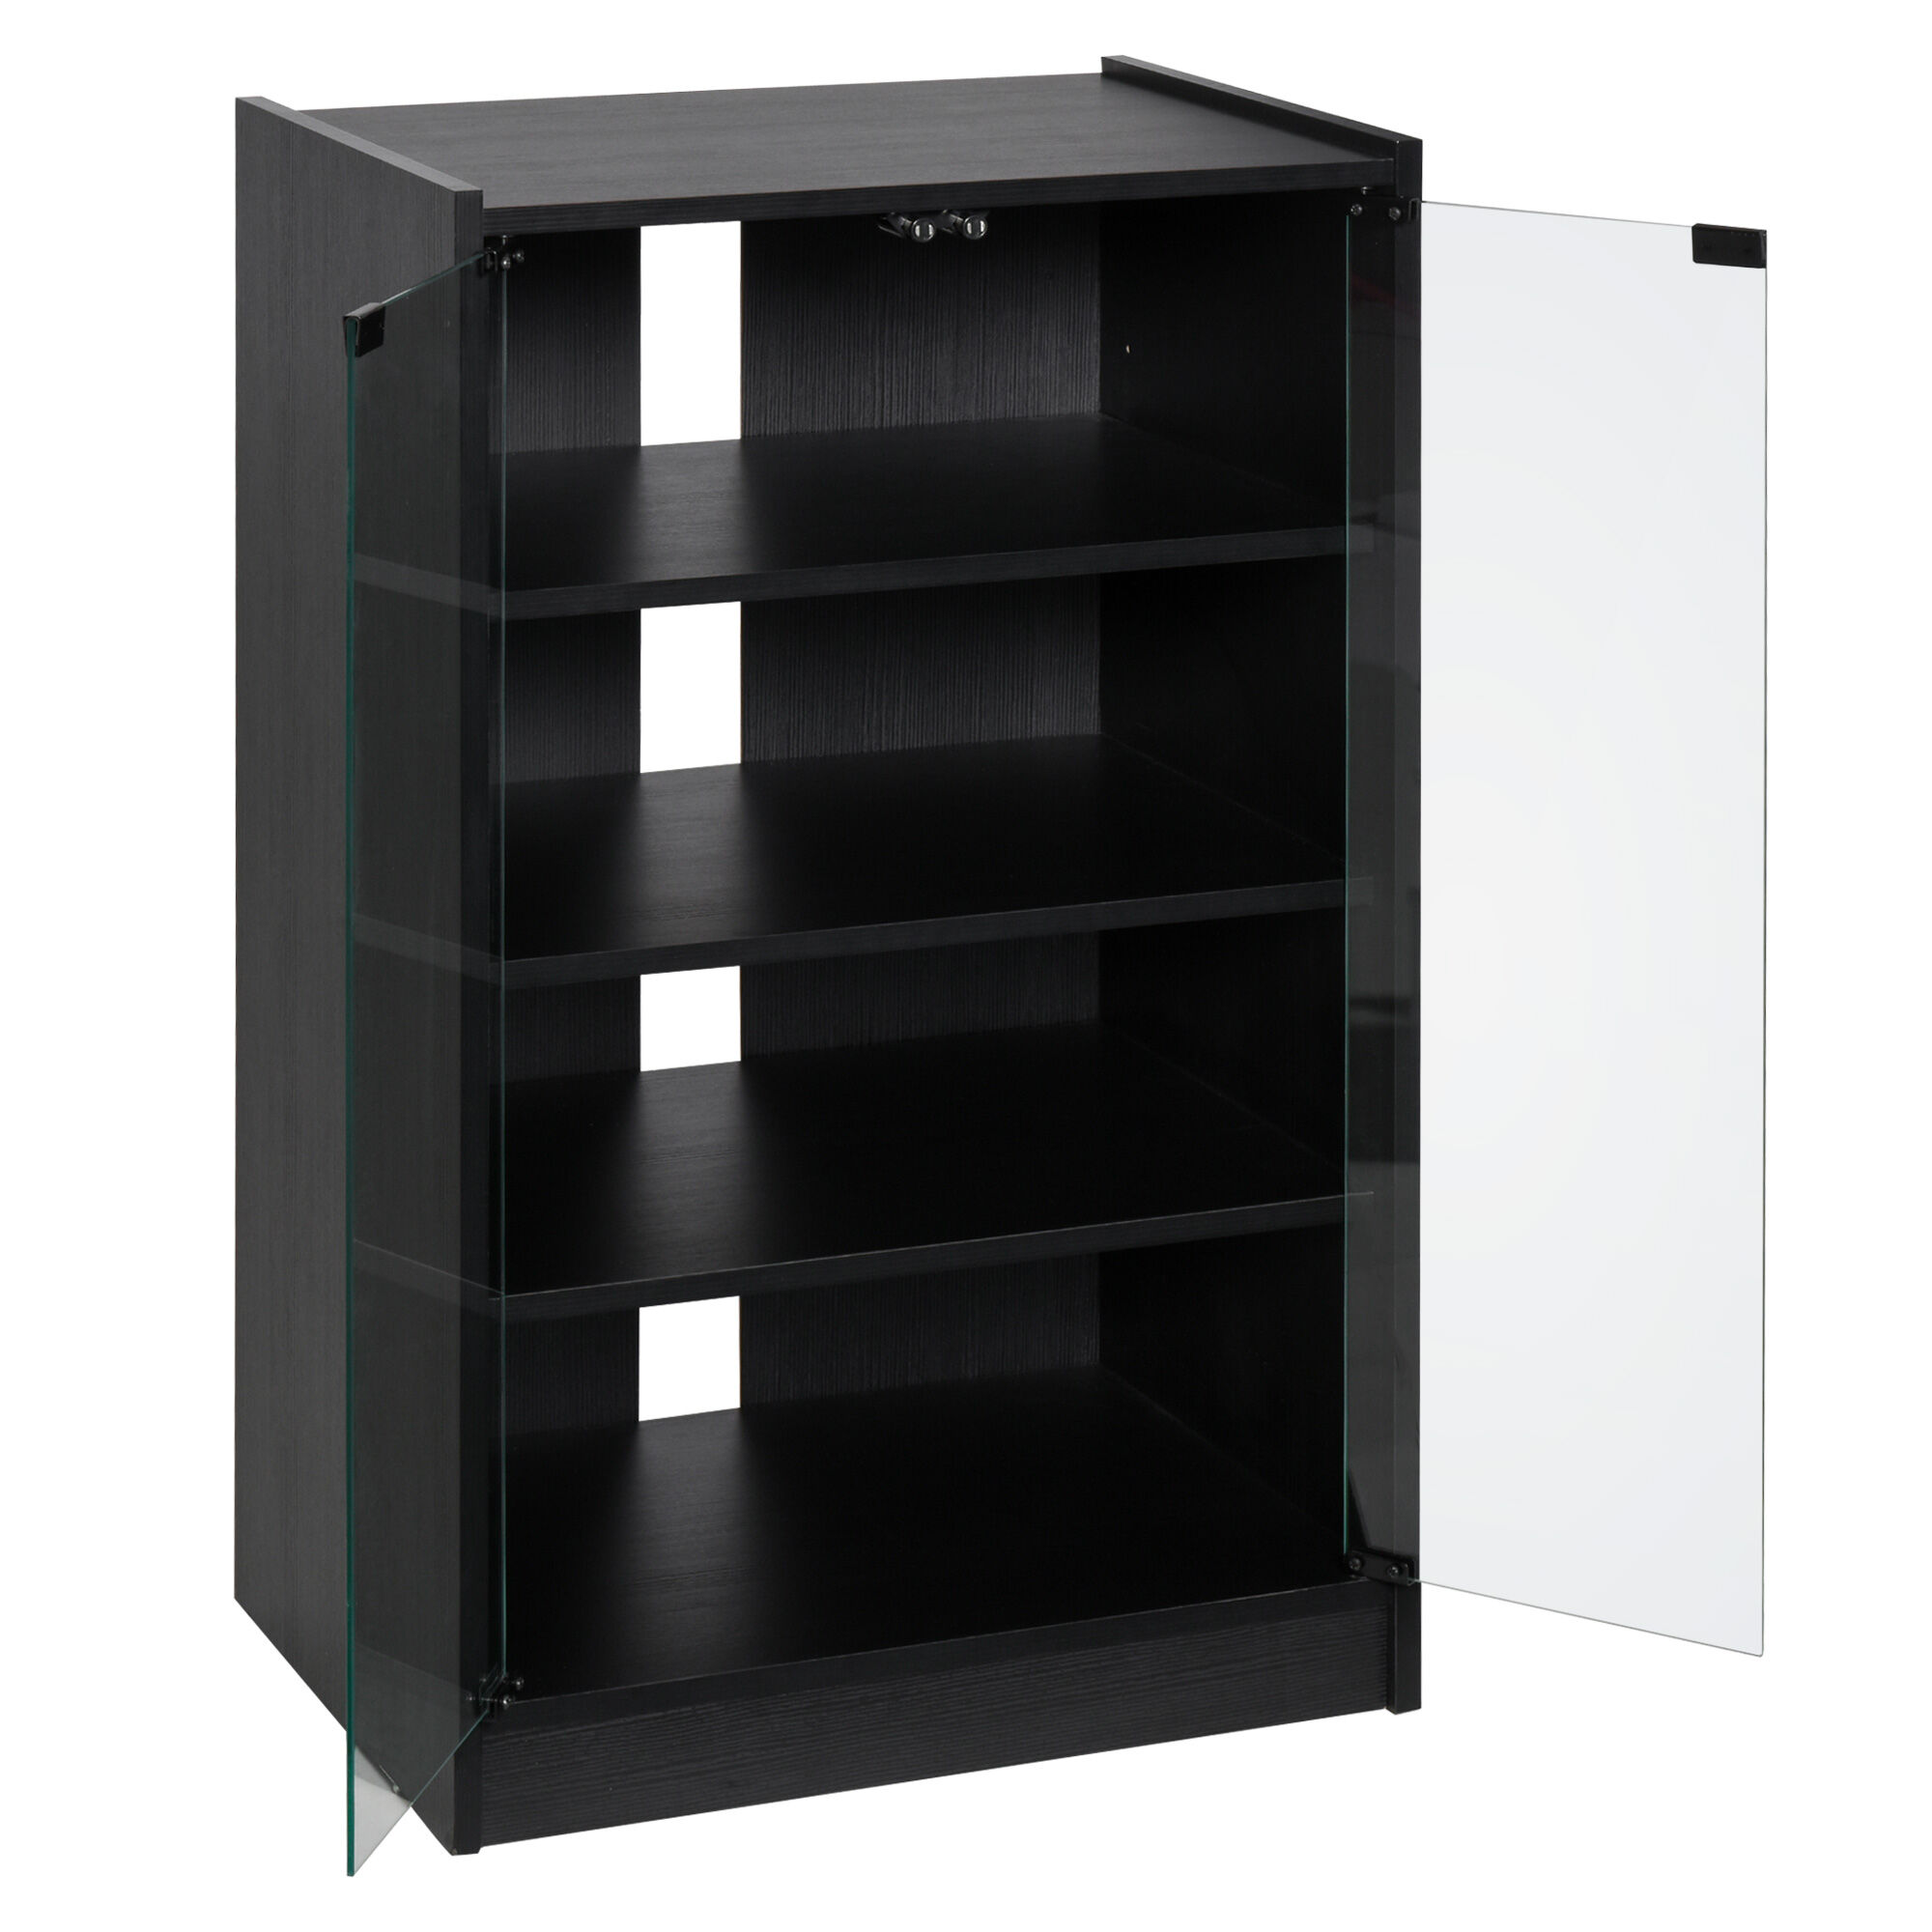 HOMCOM Media Stand Cabinet 5-Tier with Adjustable Shelves Tempered Glass Door for TV Gaming DVD Black   Aosom.com